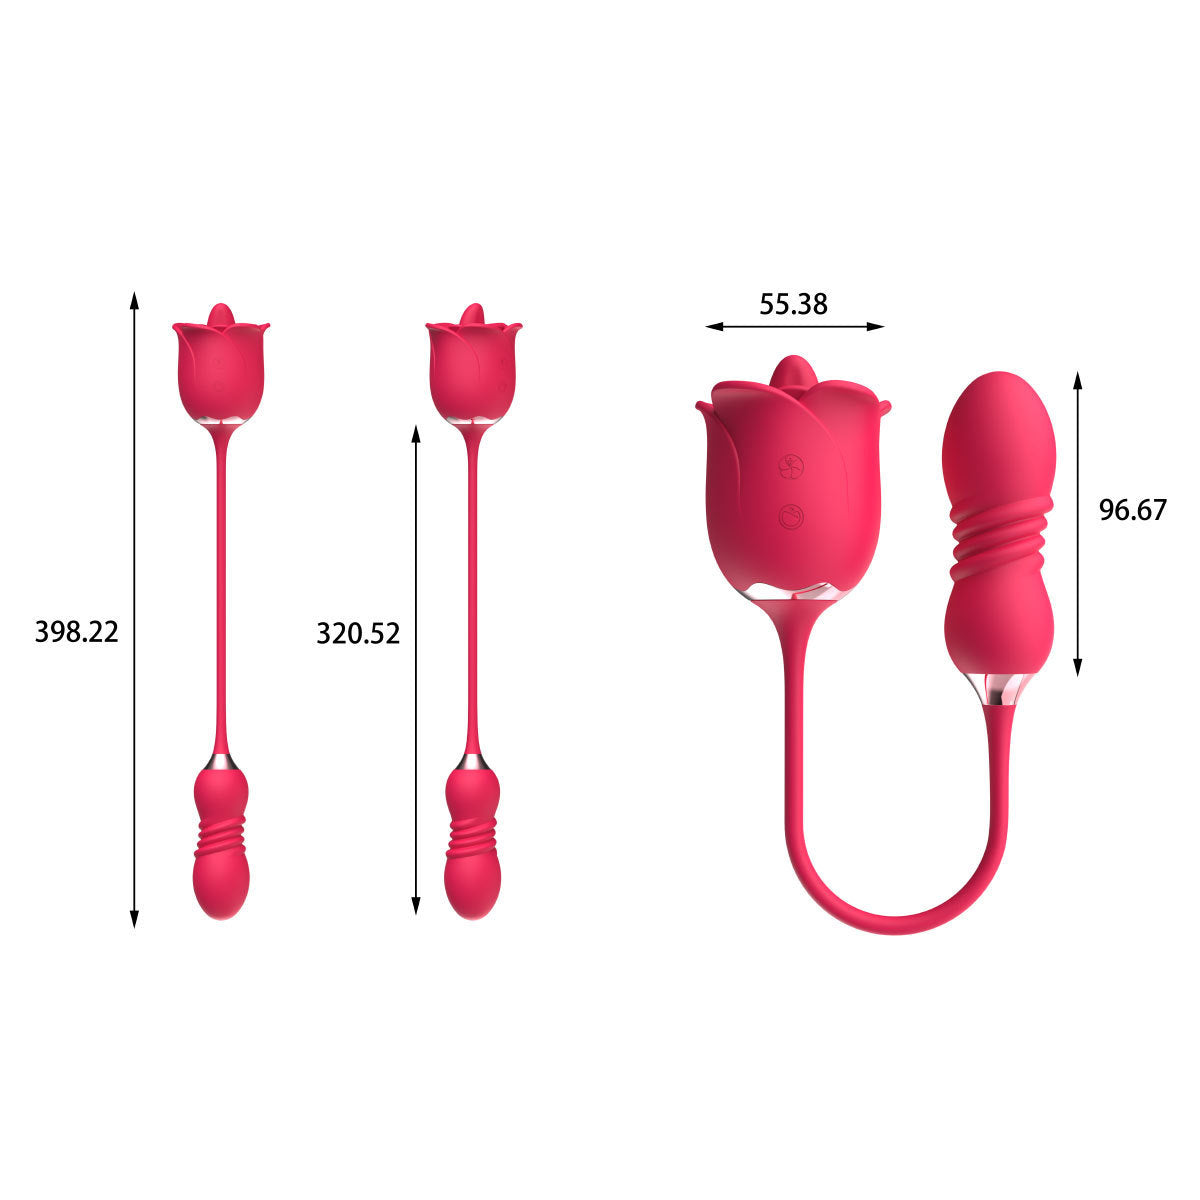 Double End Clit Stimulator Dildo Thrusting Female Sex Toy - Rose Toy Women Vibrator